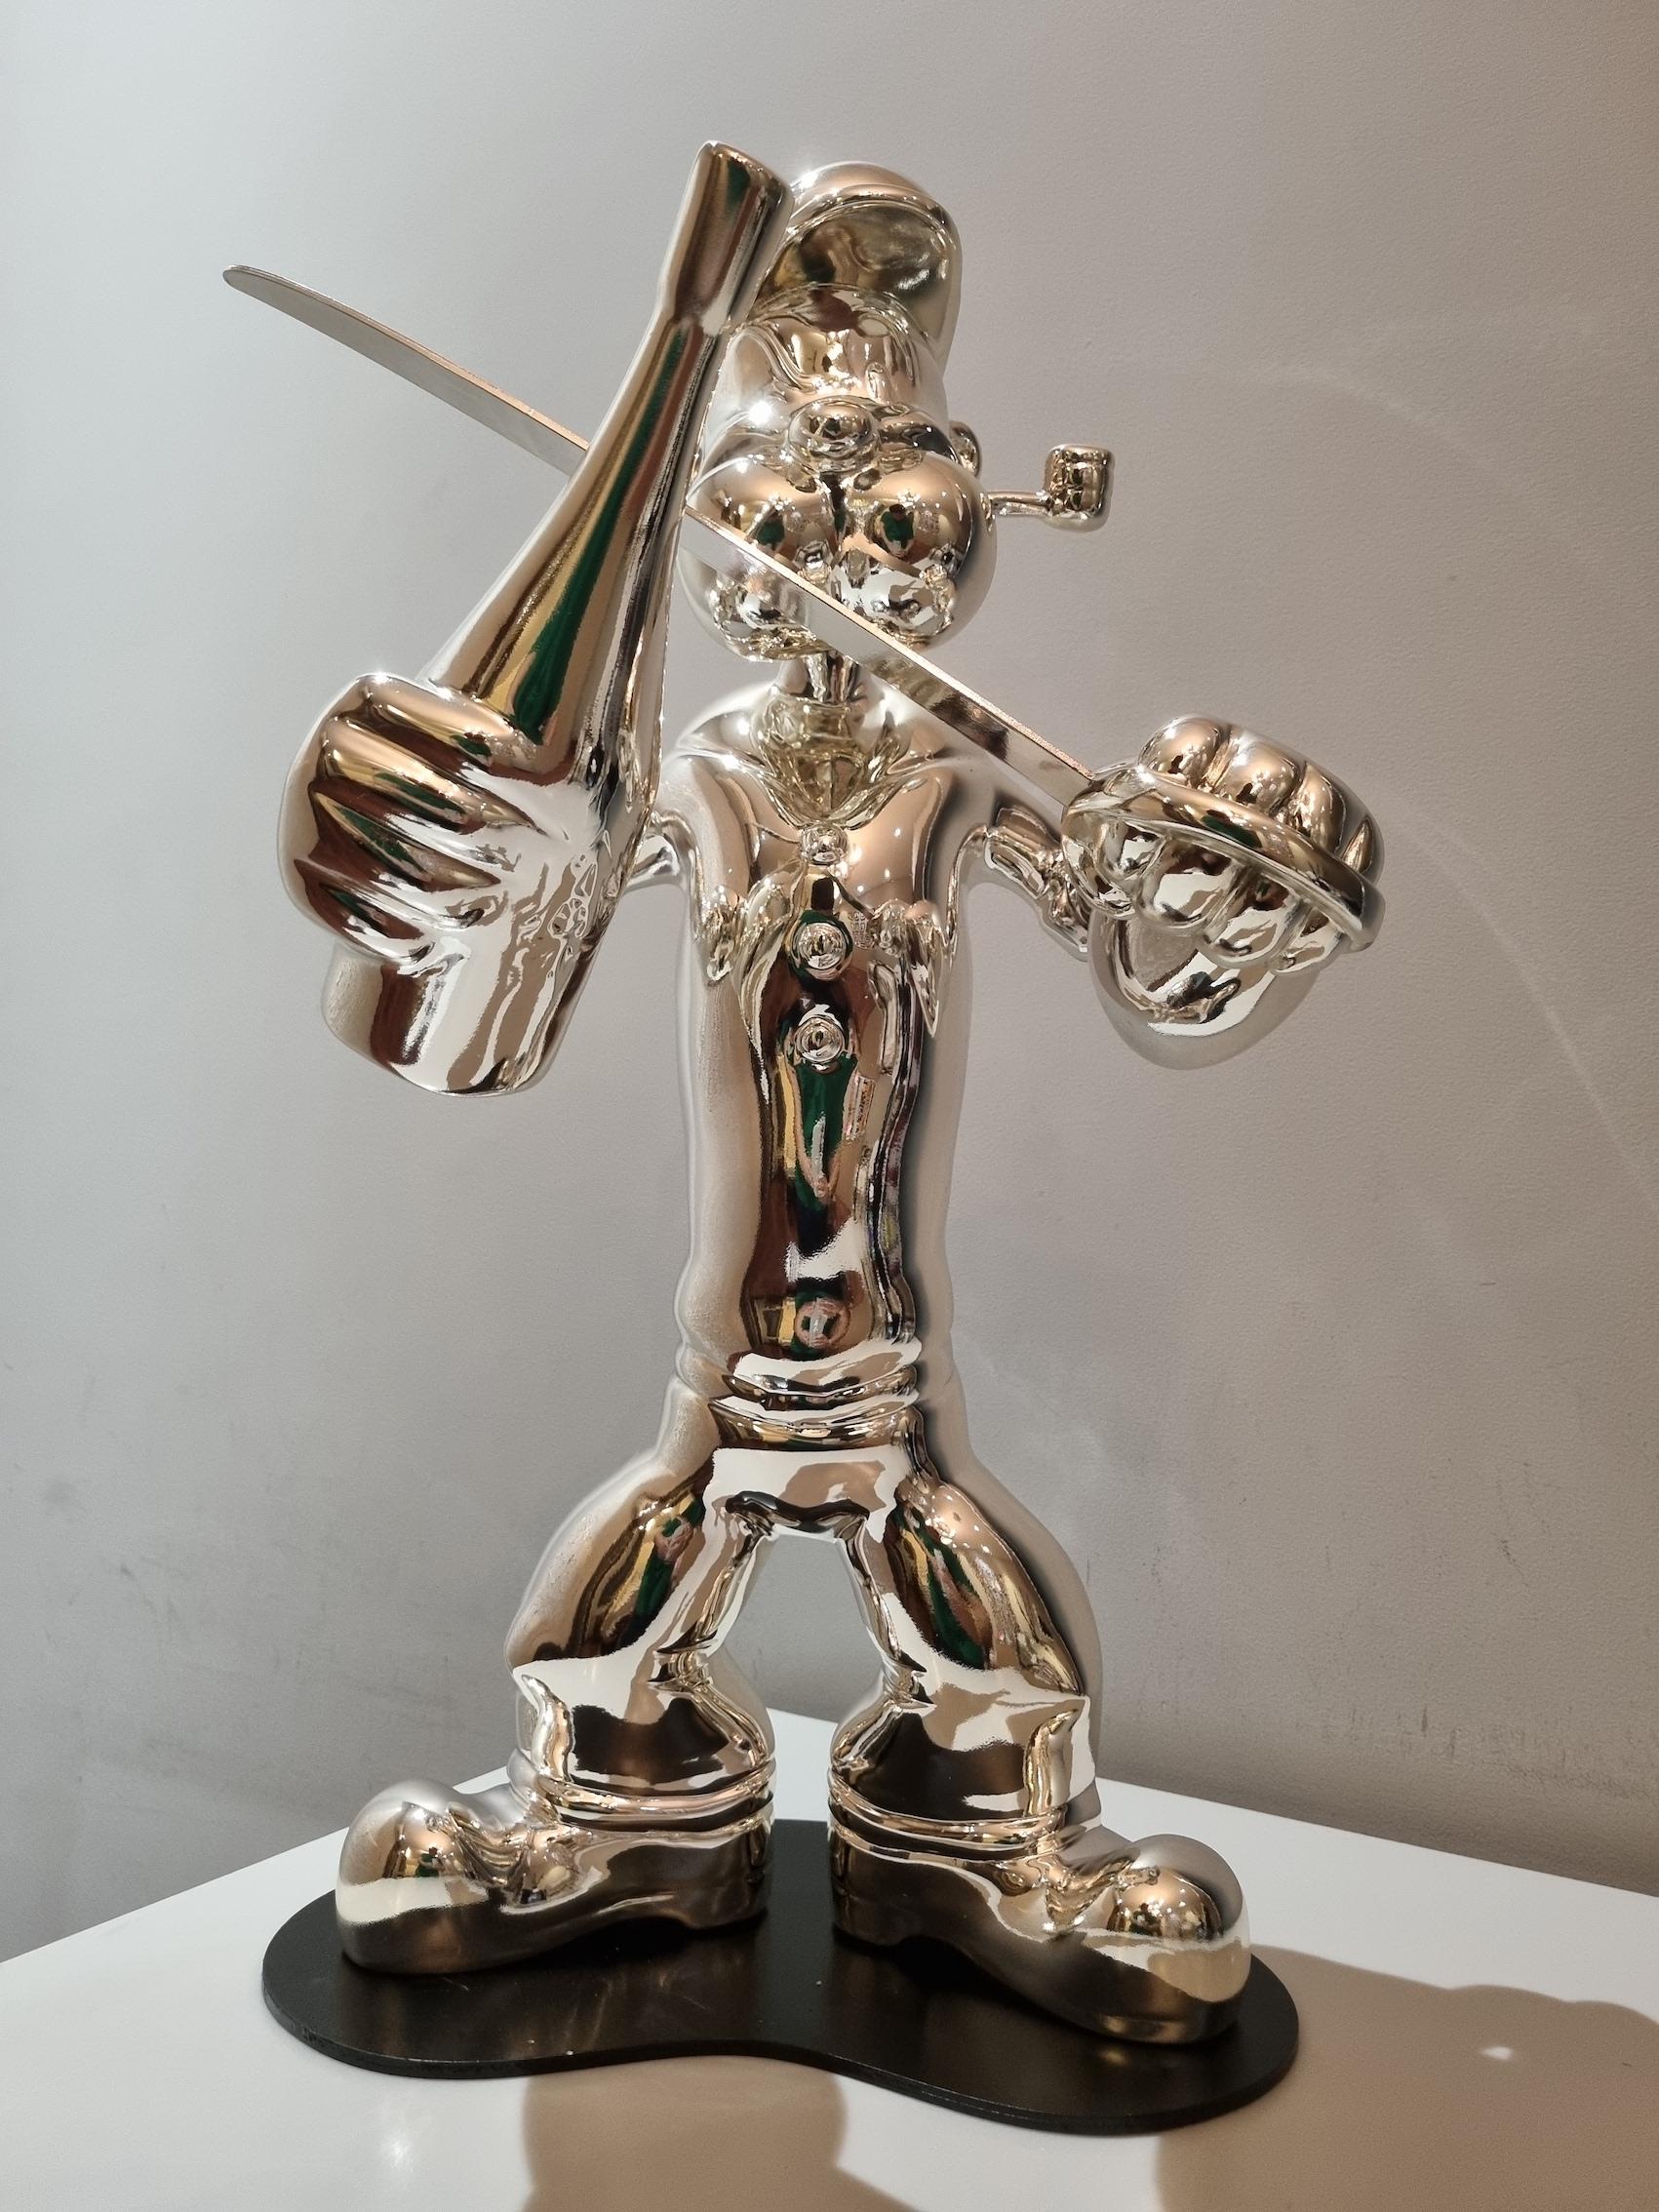 Popeye-originale ikonische Pop Art moderne Skulptur Figur-Kunstwerk-Zeitgenössische Kunst